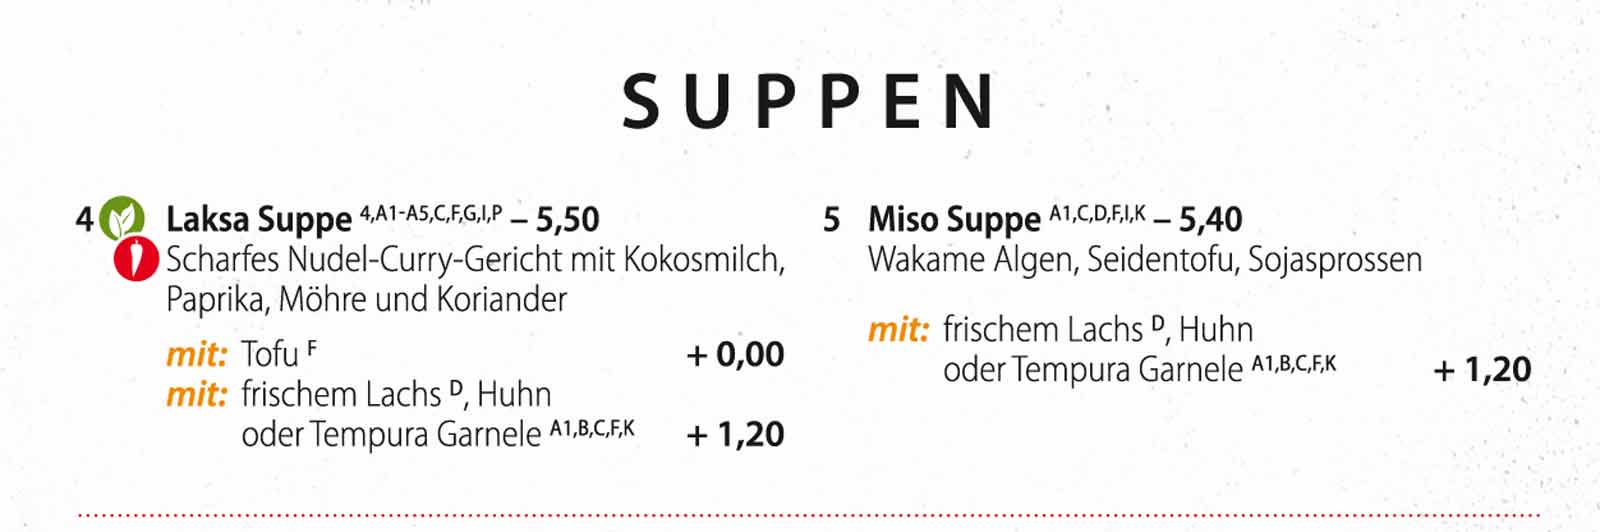 Sushifreunde Speisekarte | Suppen